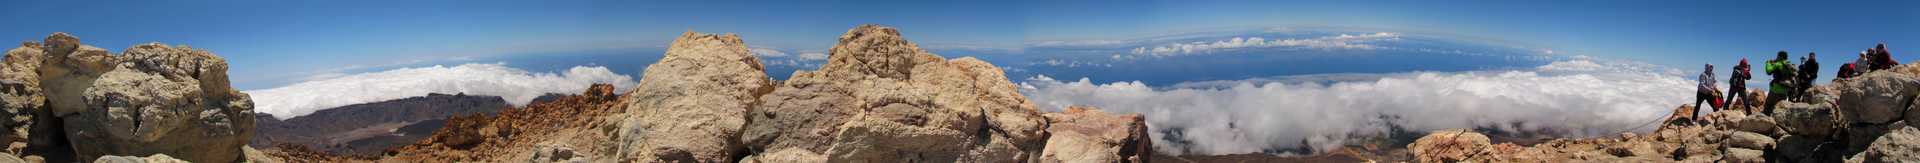 On top of Tenerifes highest mountain, the Teide